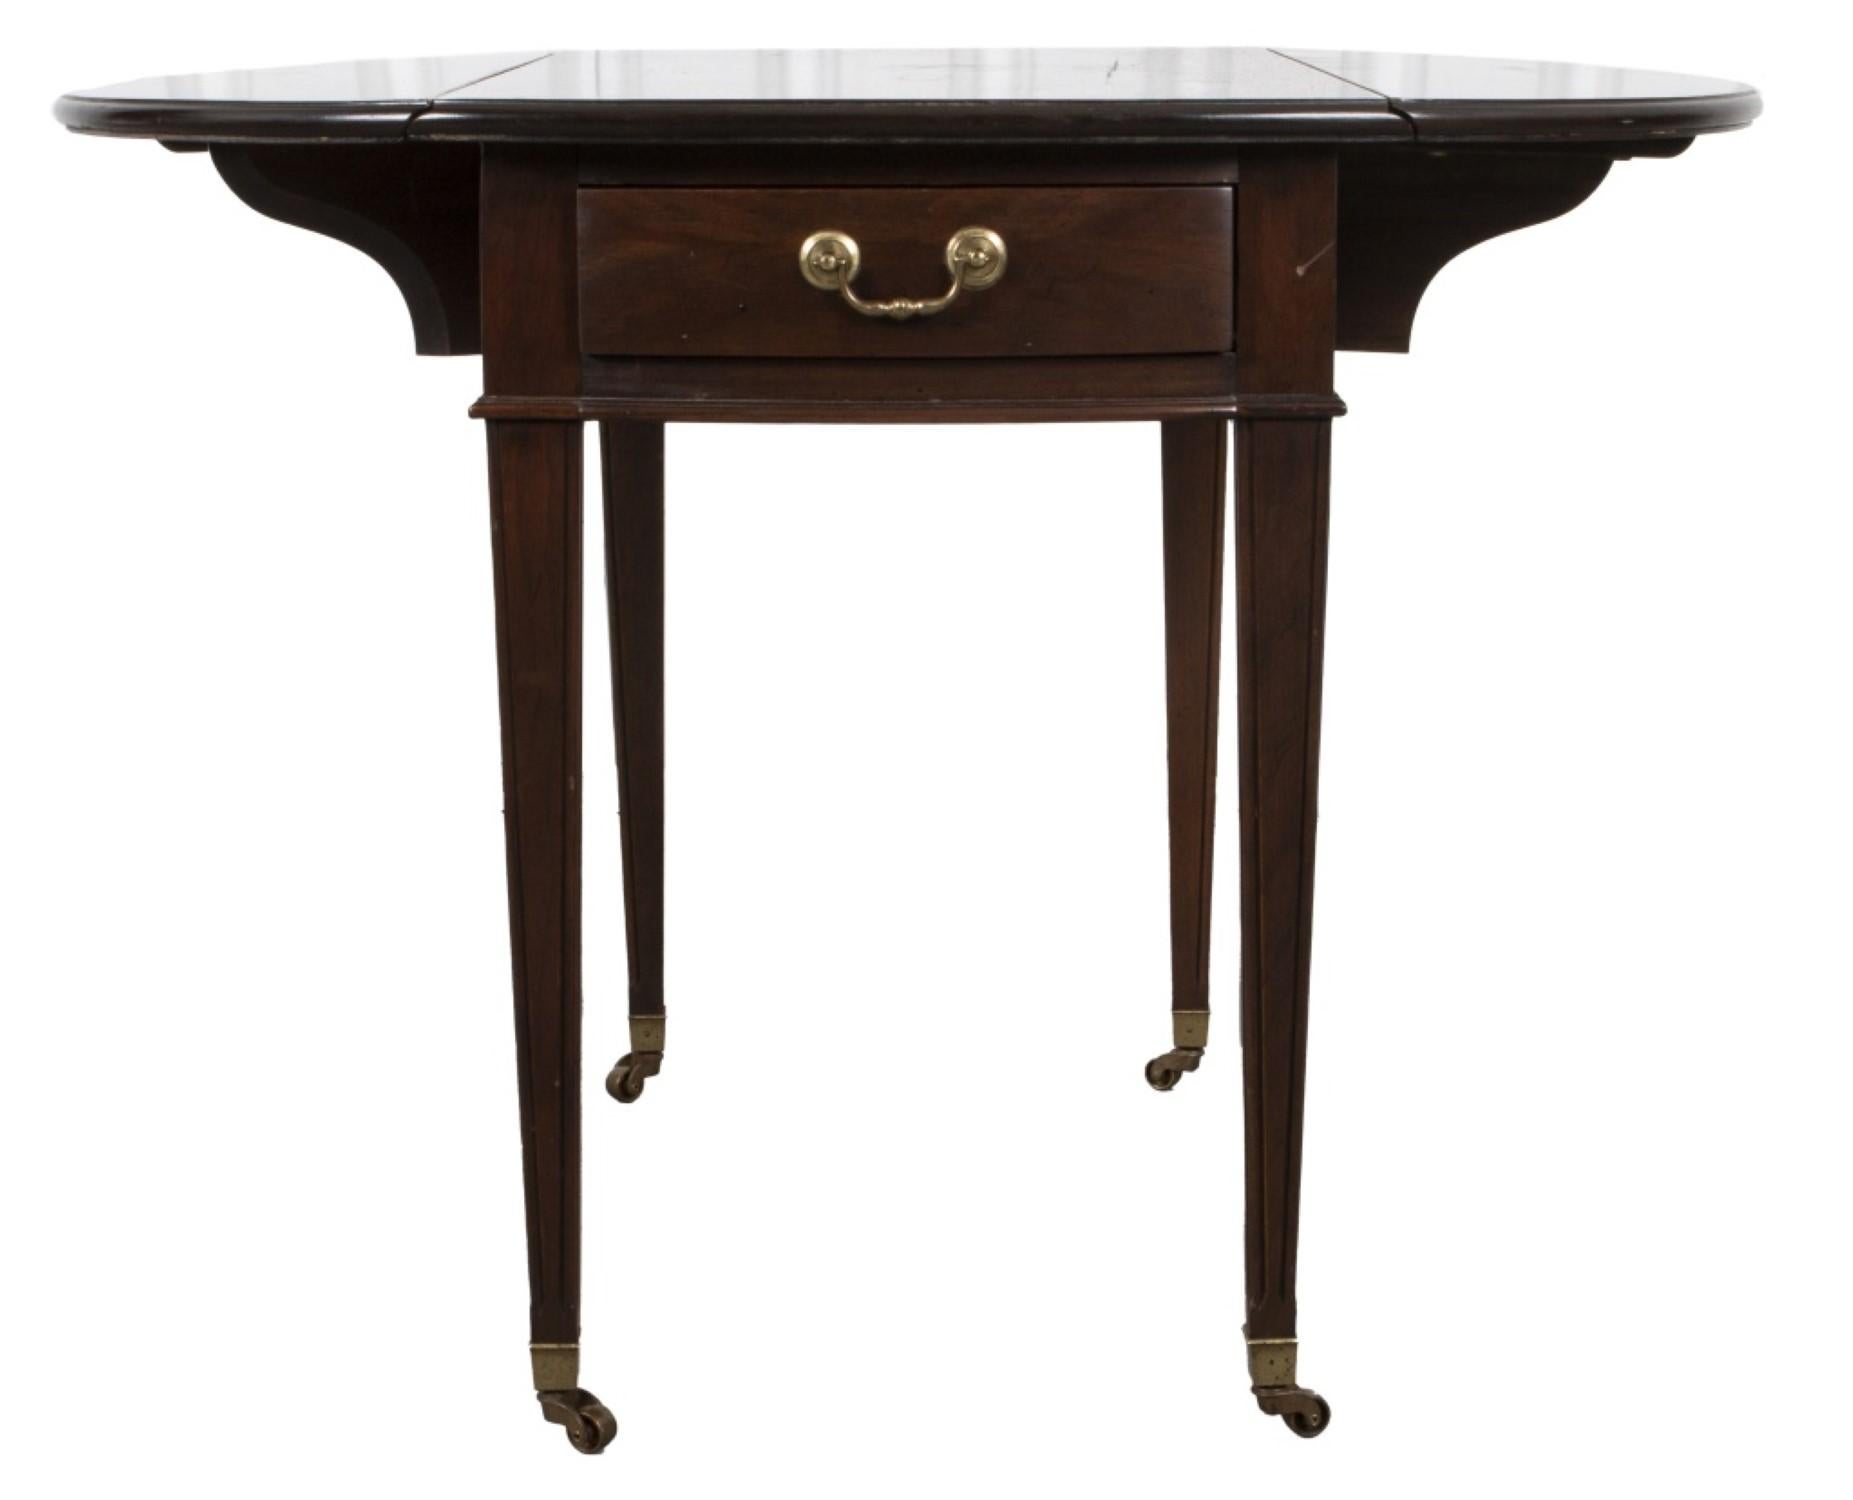 Georgian Style Mahogany Pembroke Table

Style: Georgian
Features: Mahogany construction, Pembroke table design.

Dealer: S138XX